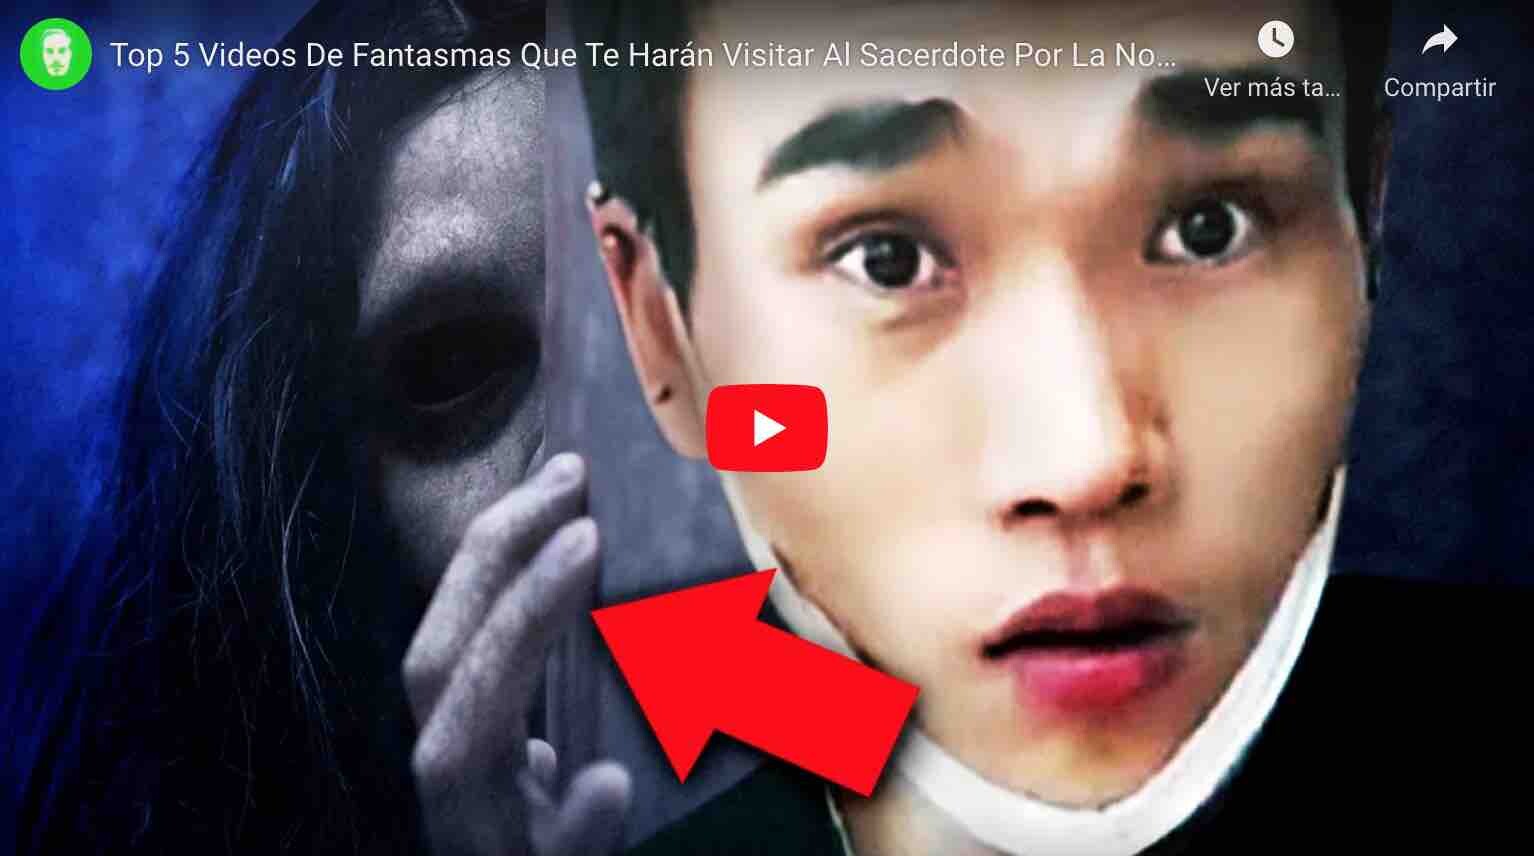 VIDEO: Top 5 Videos de Fantasmas Captados en Cámara